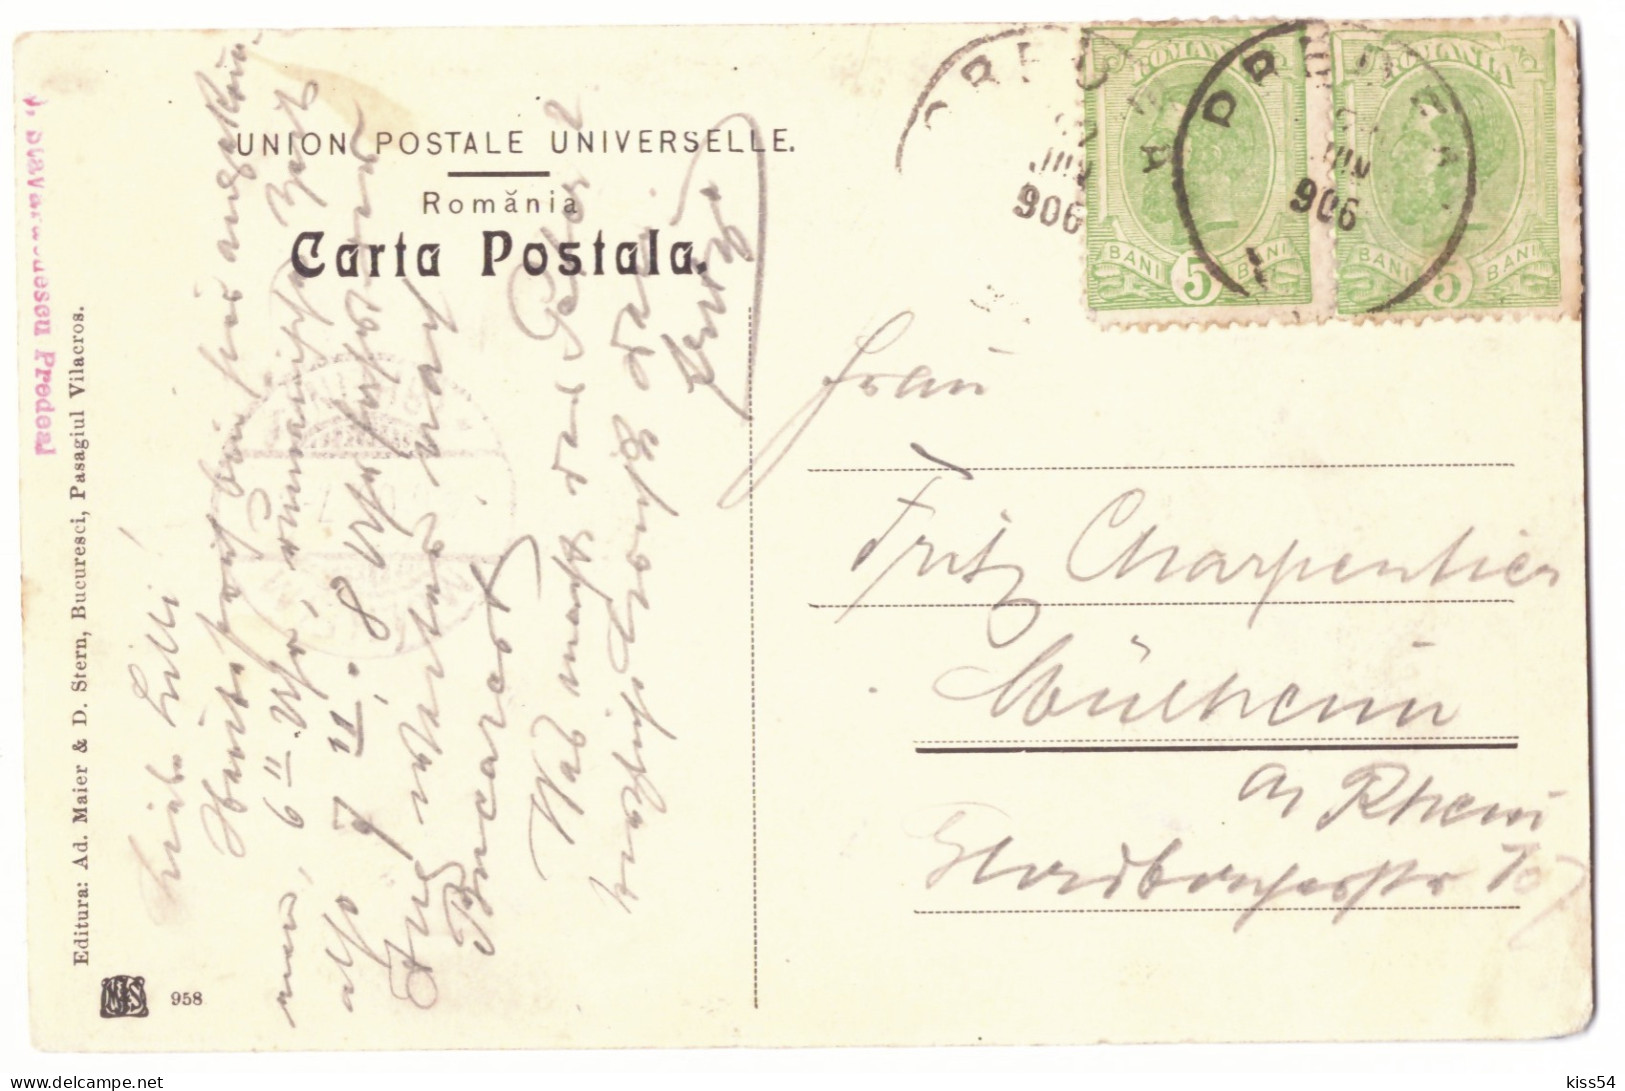 RO 83 - 21110 PREDEAL, Brasov, Romania - Old Postcard - Used - 1906 - Rumänien